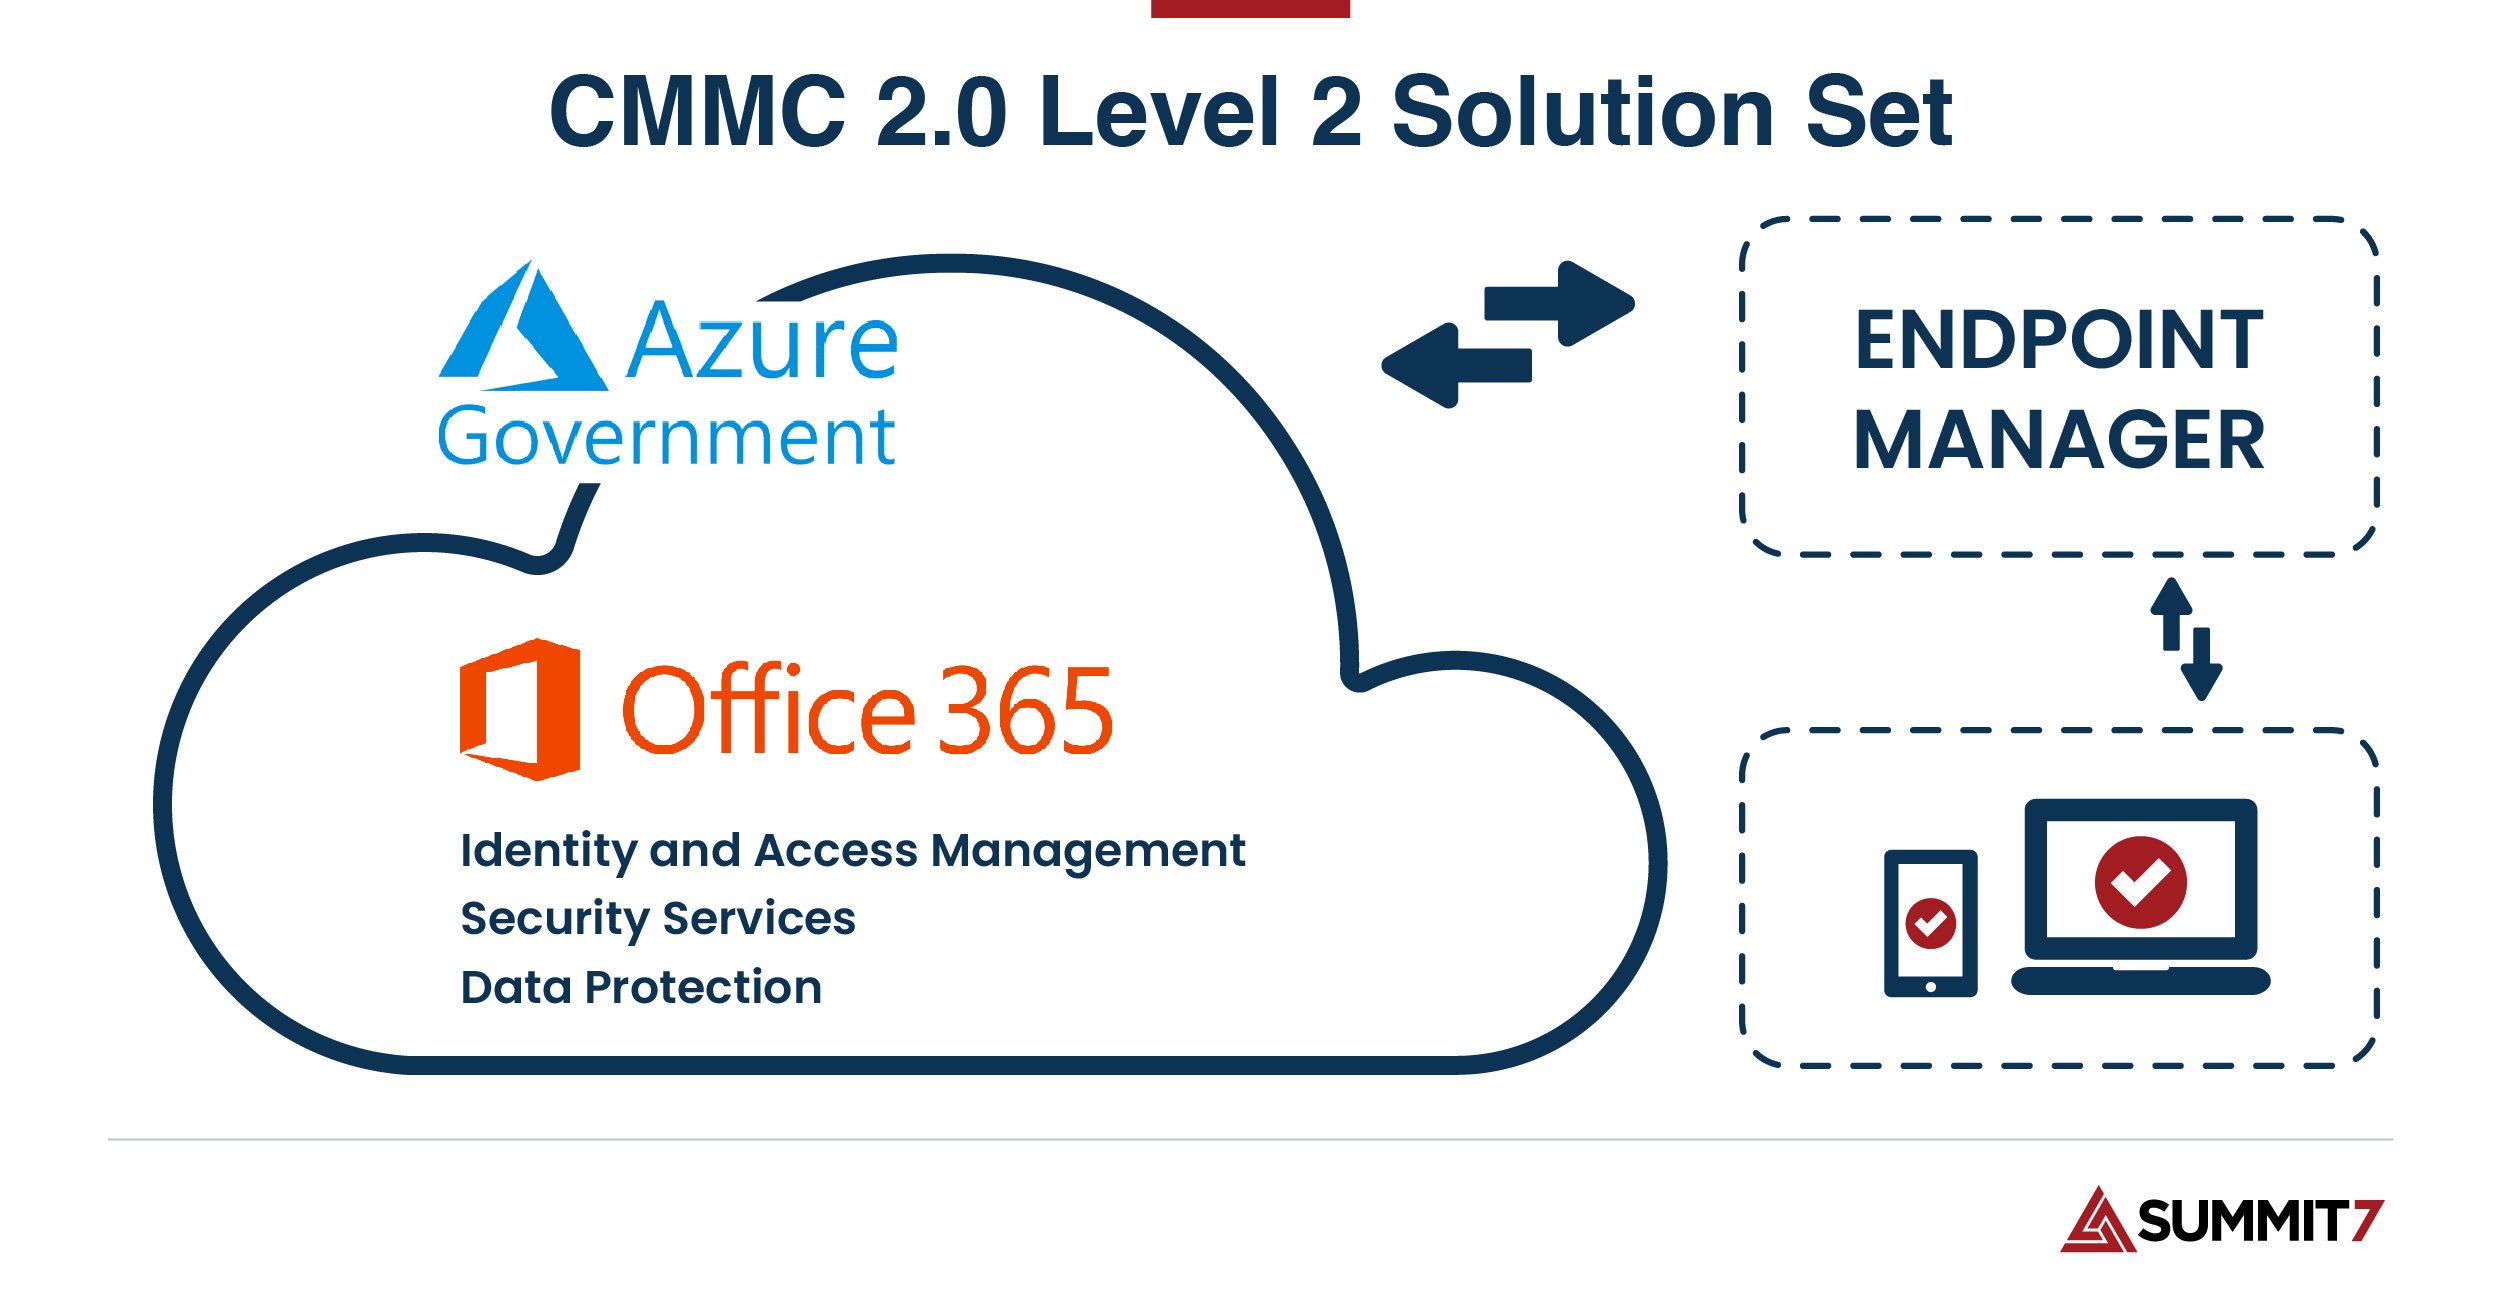 CMMC 2.0 Level 2 Solution Set